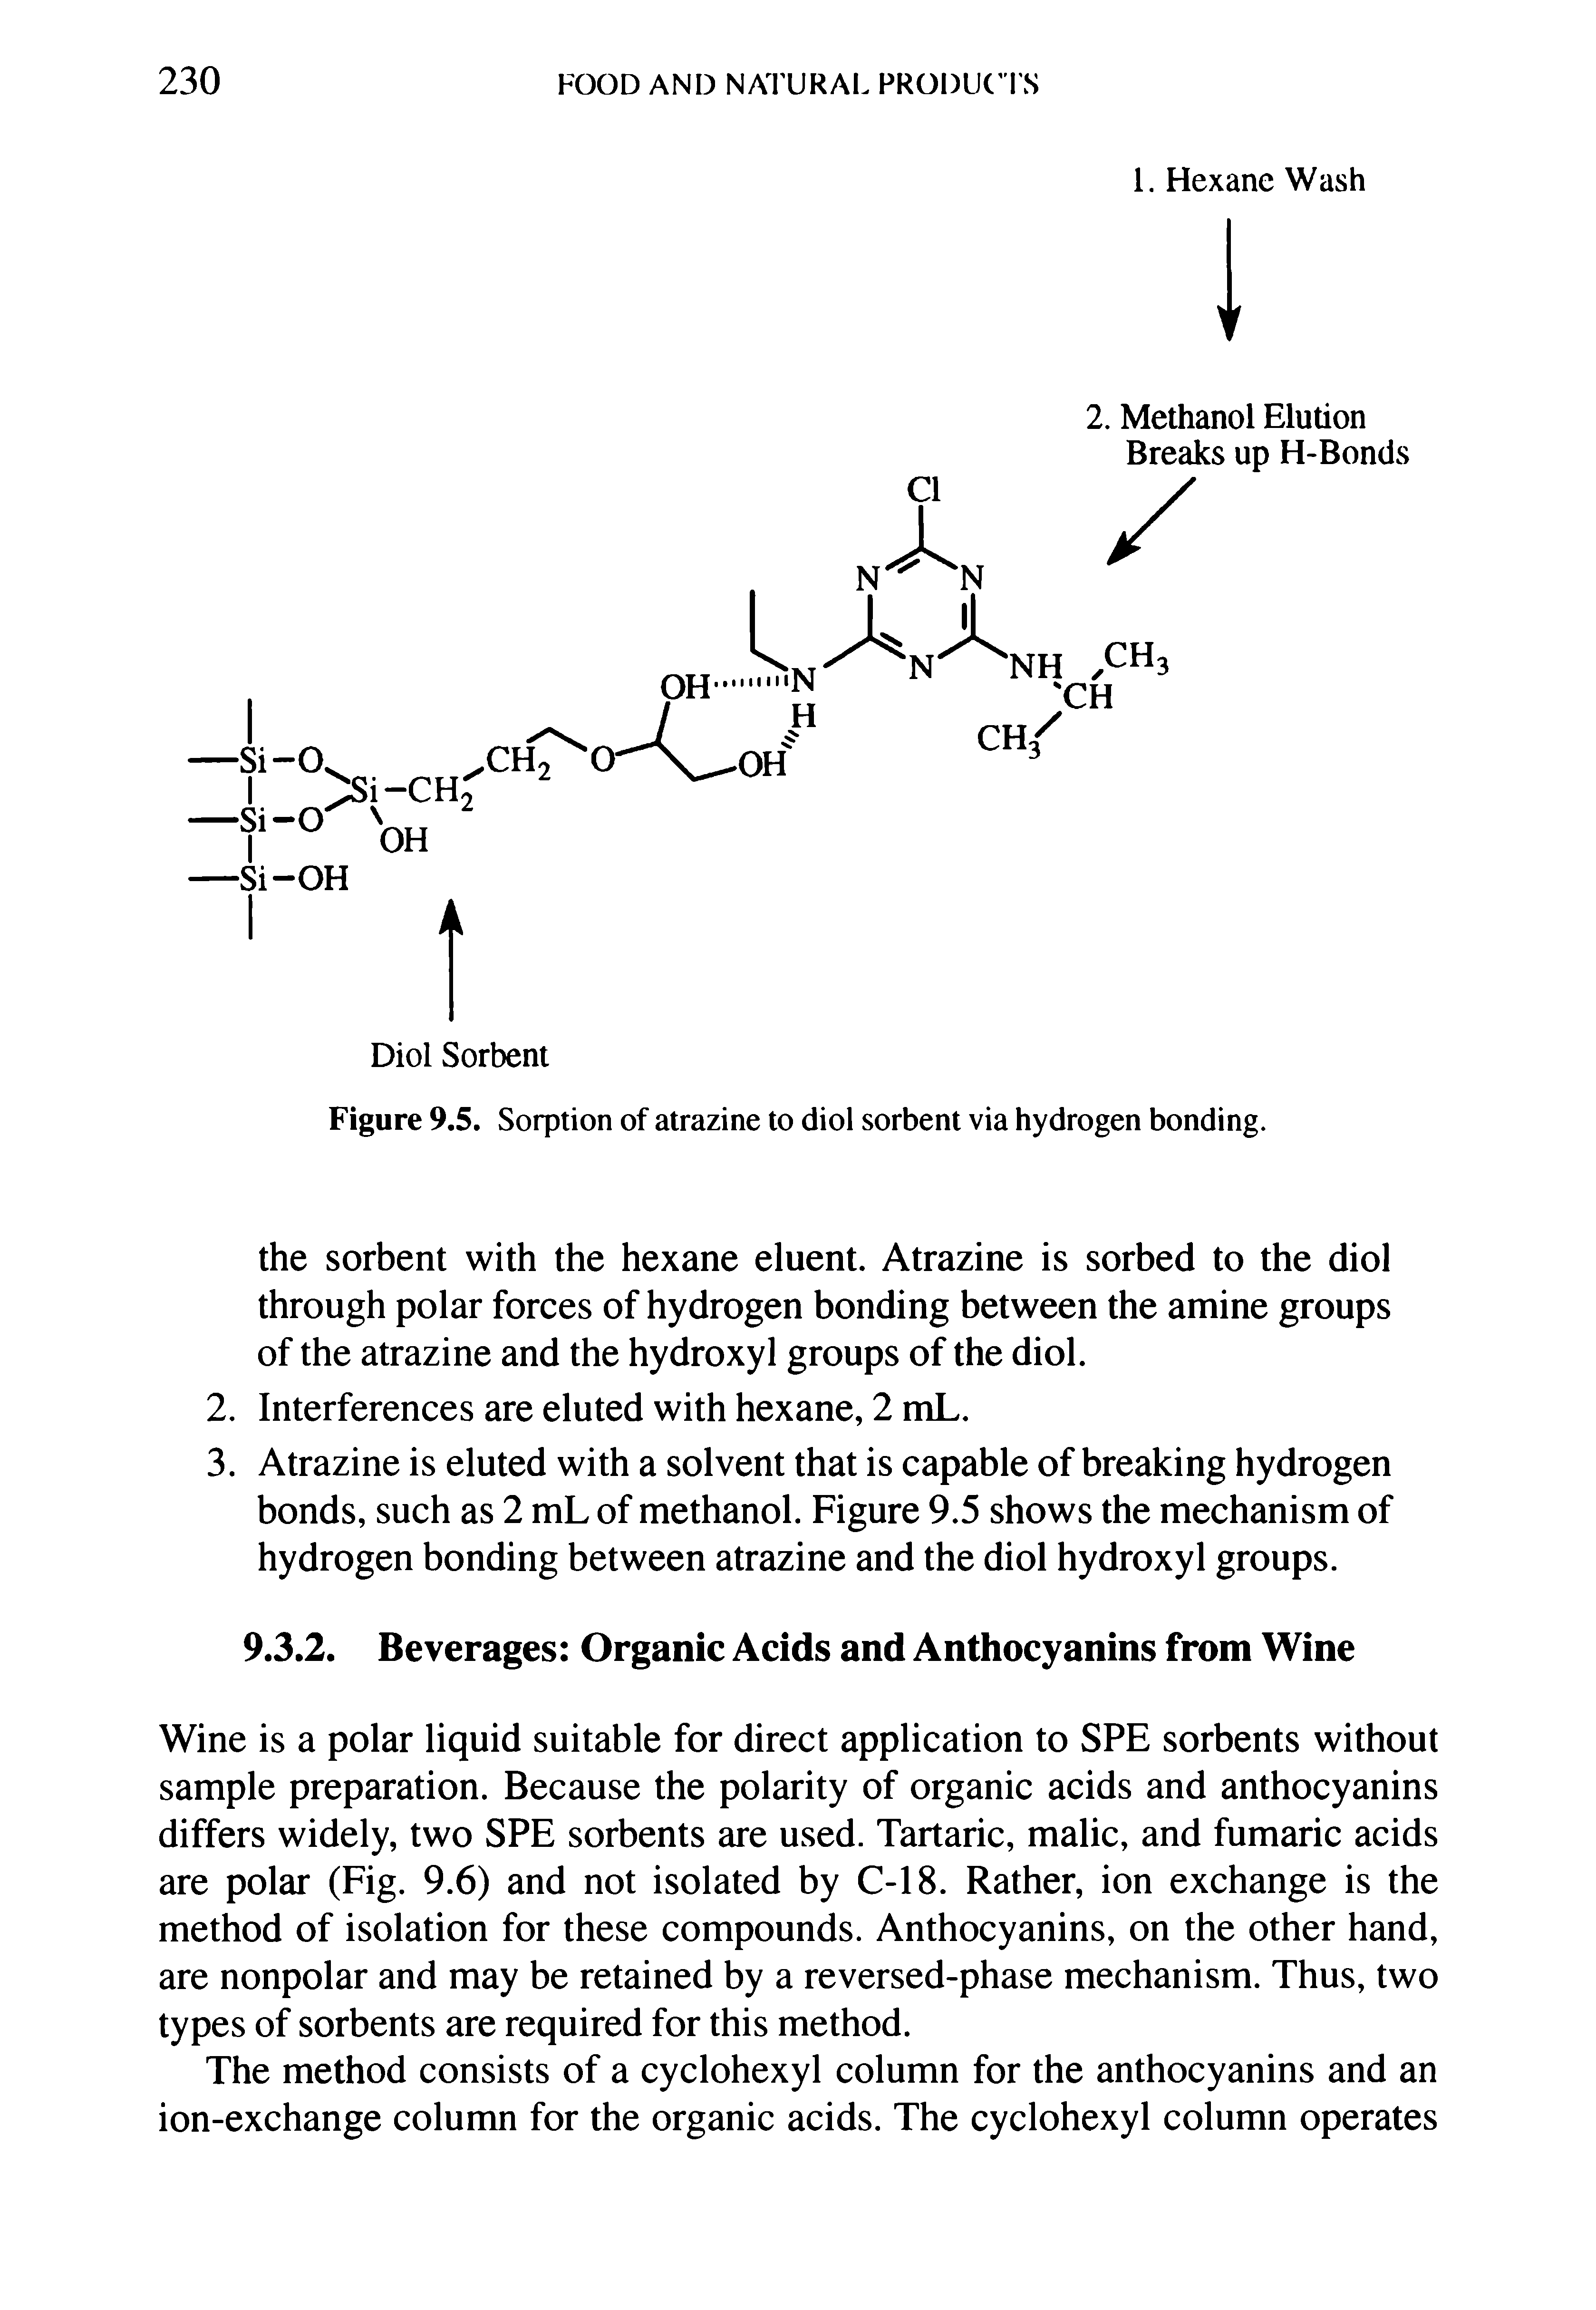 Figure 9.5. Sorption of atrazine to diol sorbent via hydrogen bonding.